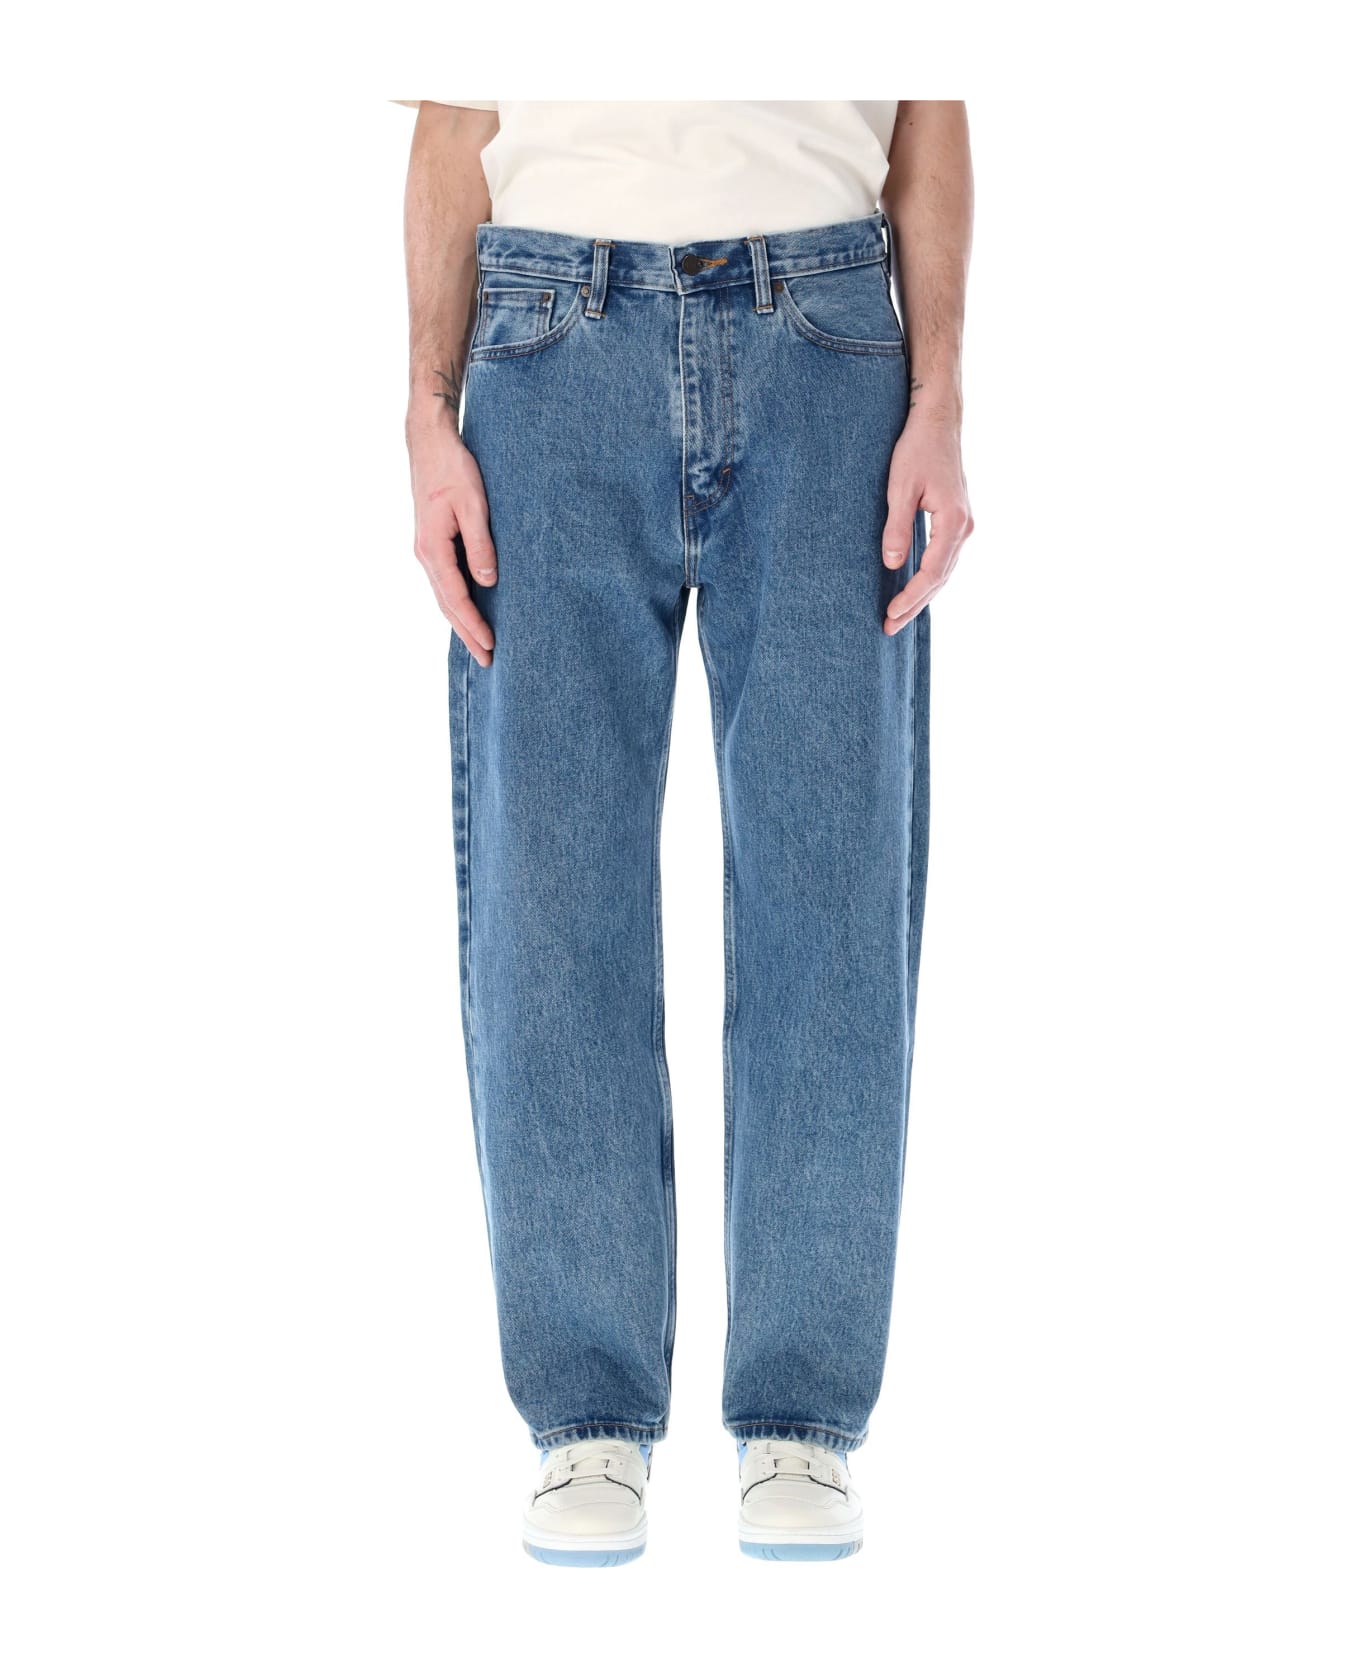 Levi's Cotton Baggy Five Pocket Jeans - MED BLUE